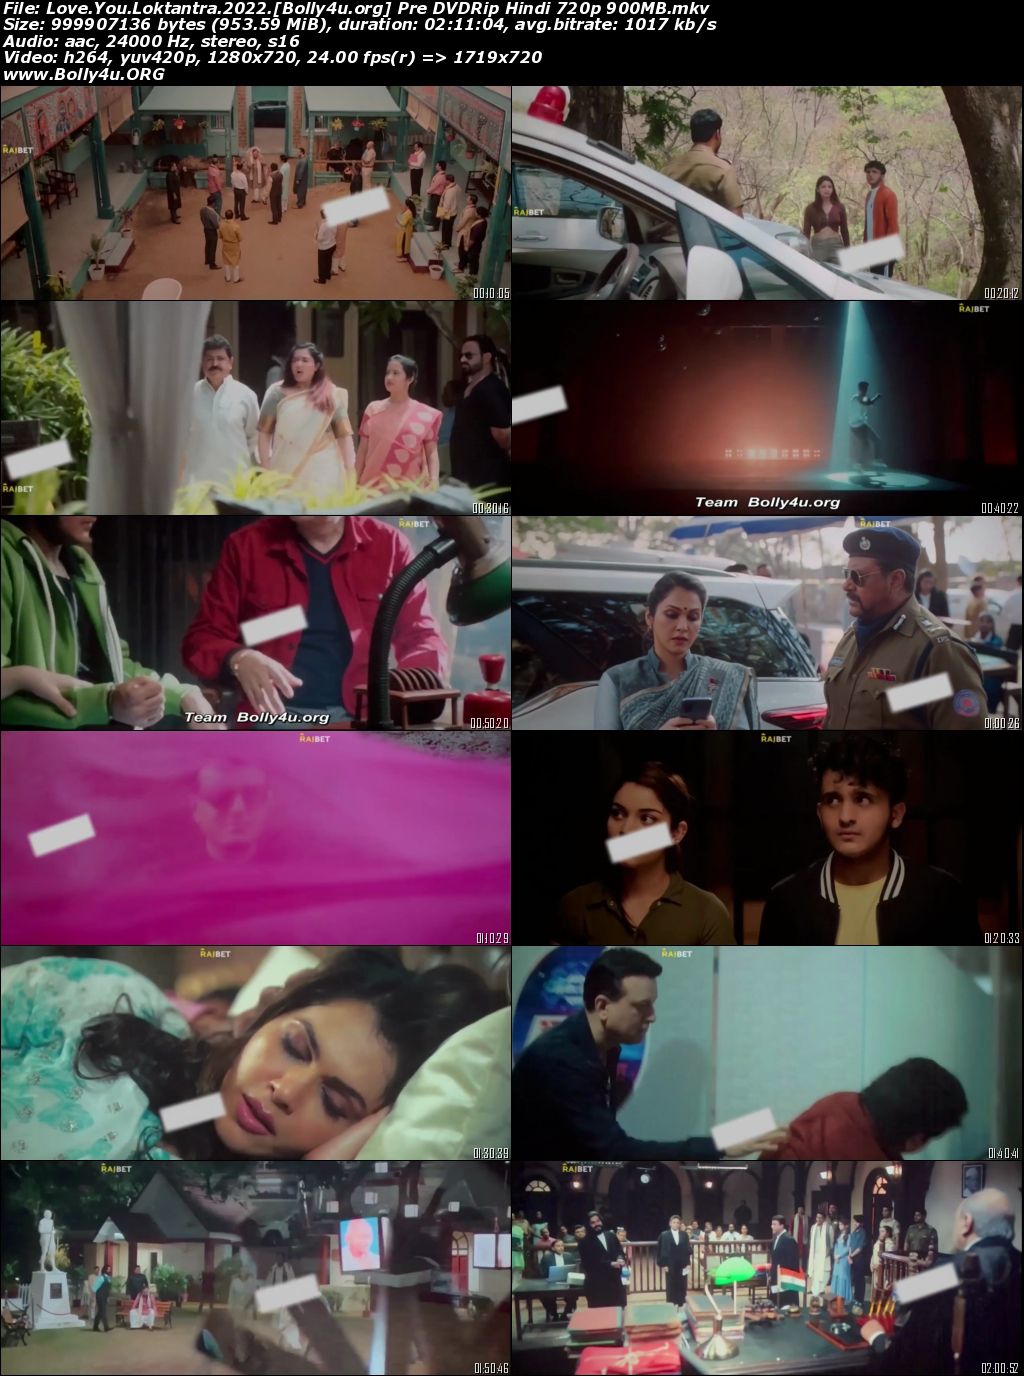 Love You Loktantra 2022 Pre DVDRip Hindi Full Movie Download 720p 480p